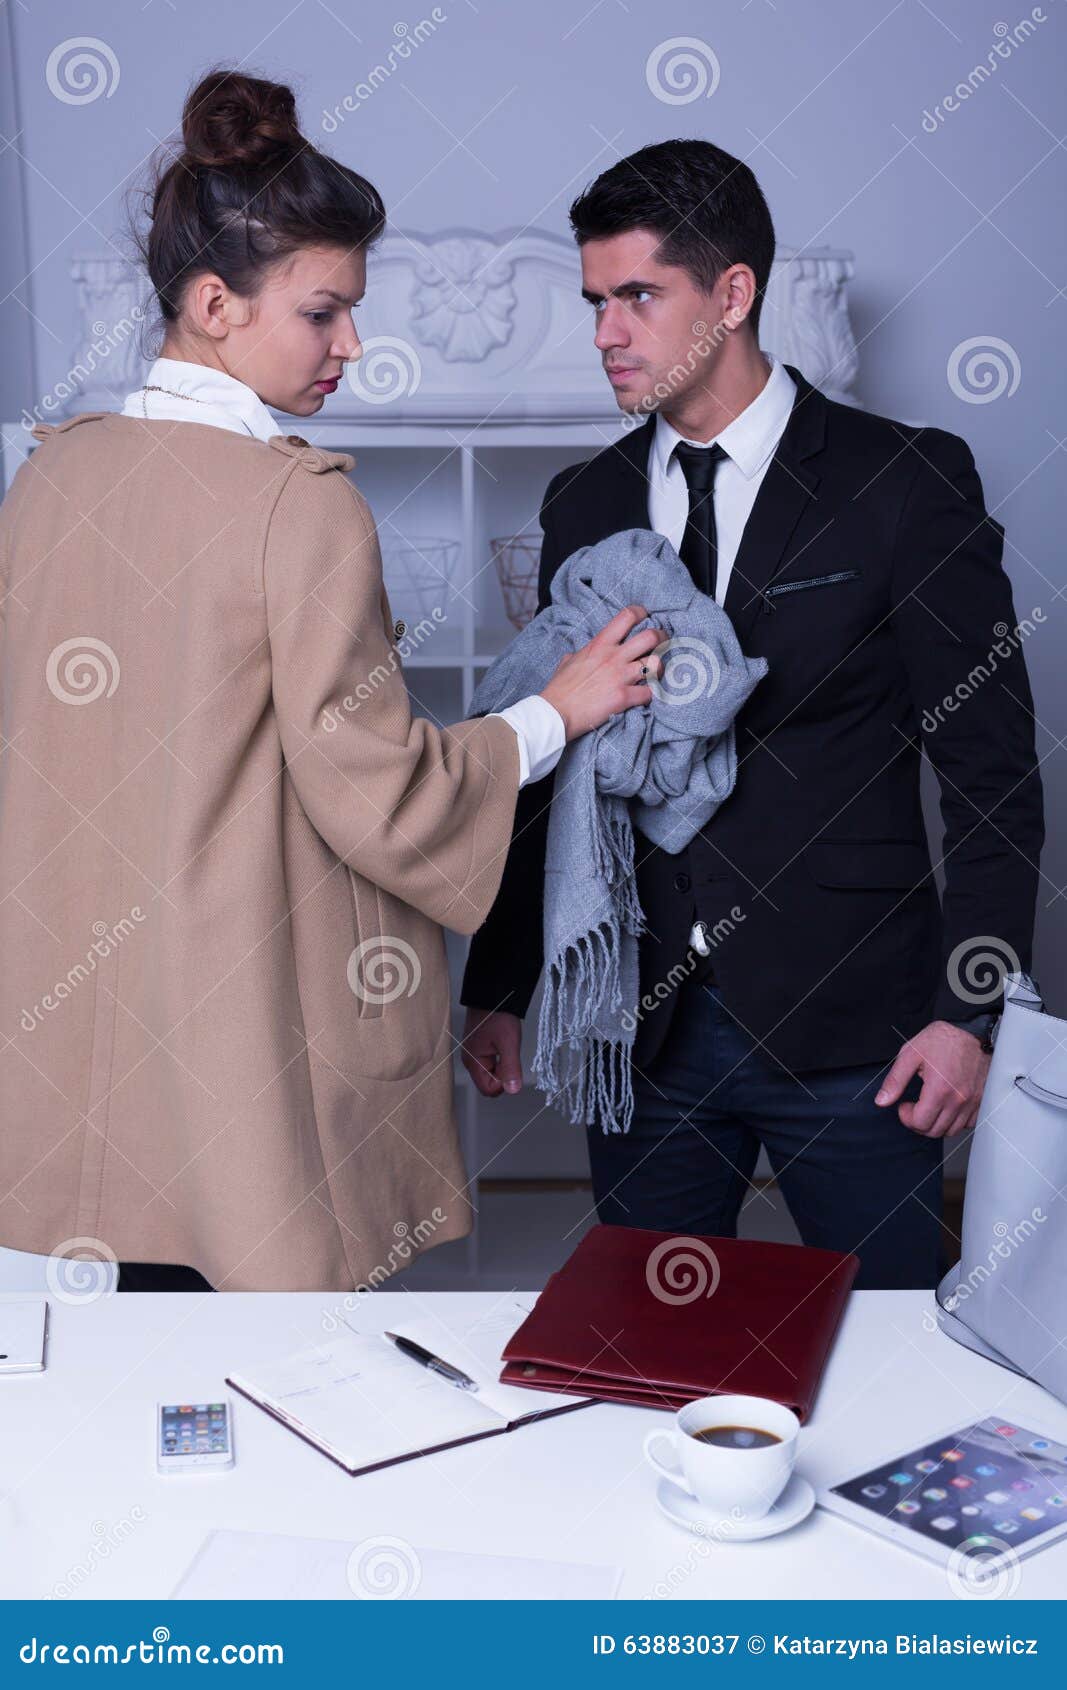 businessman opposing his boss